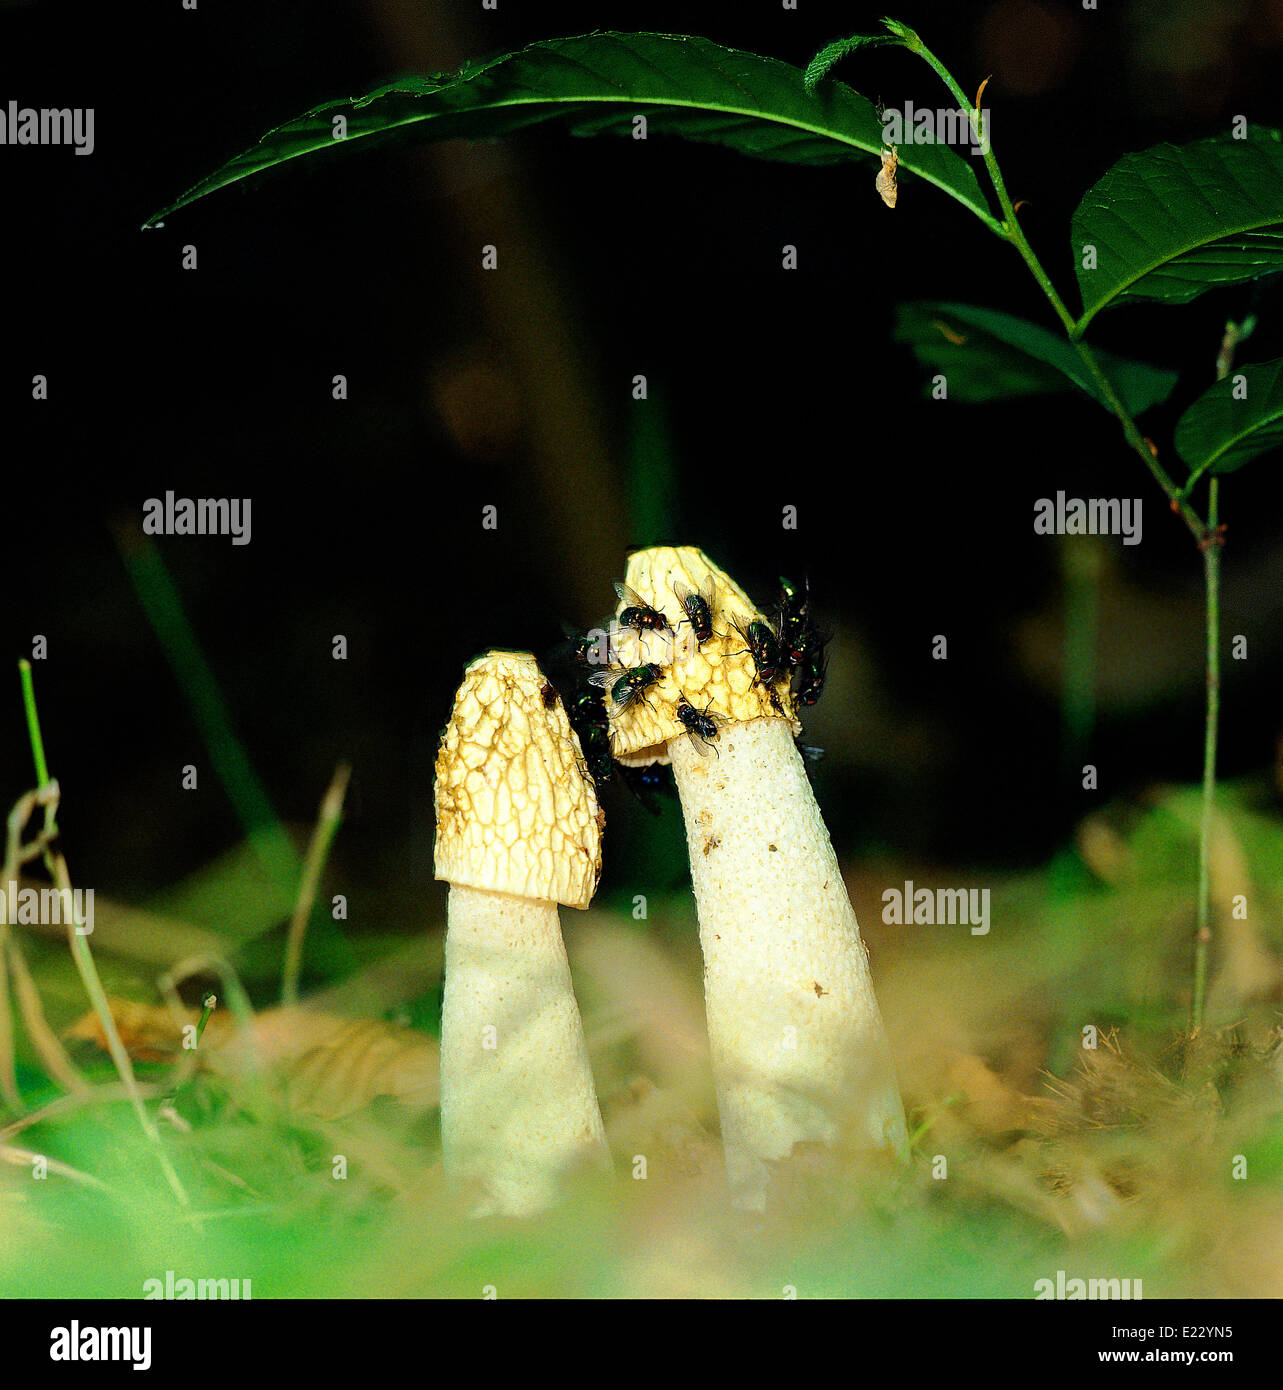 Common stinkhorn (Phallus impudicus) mushroom  with Blowflies on the cap or pileo Stock Photo